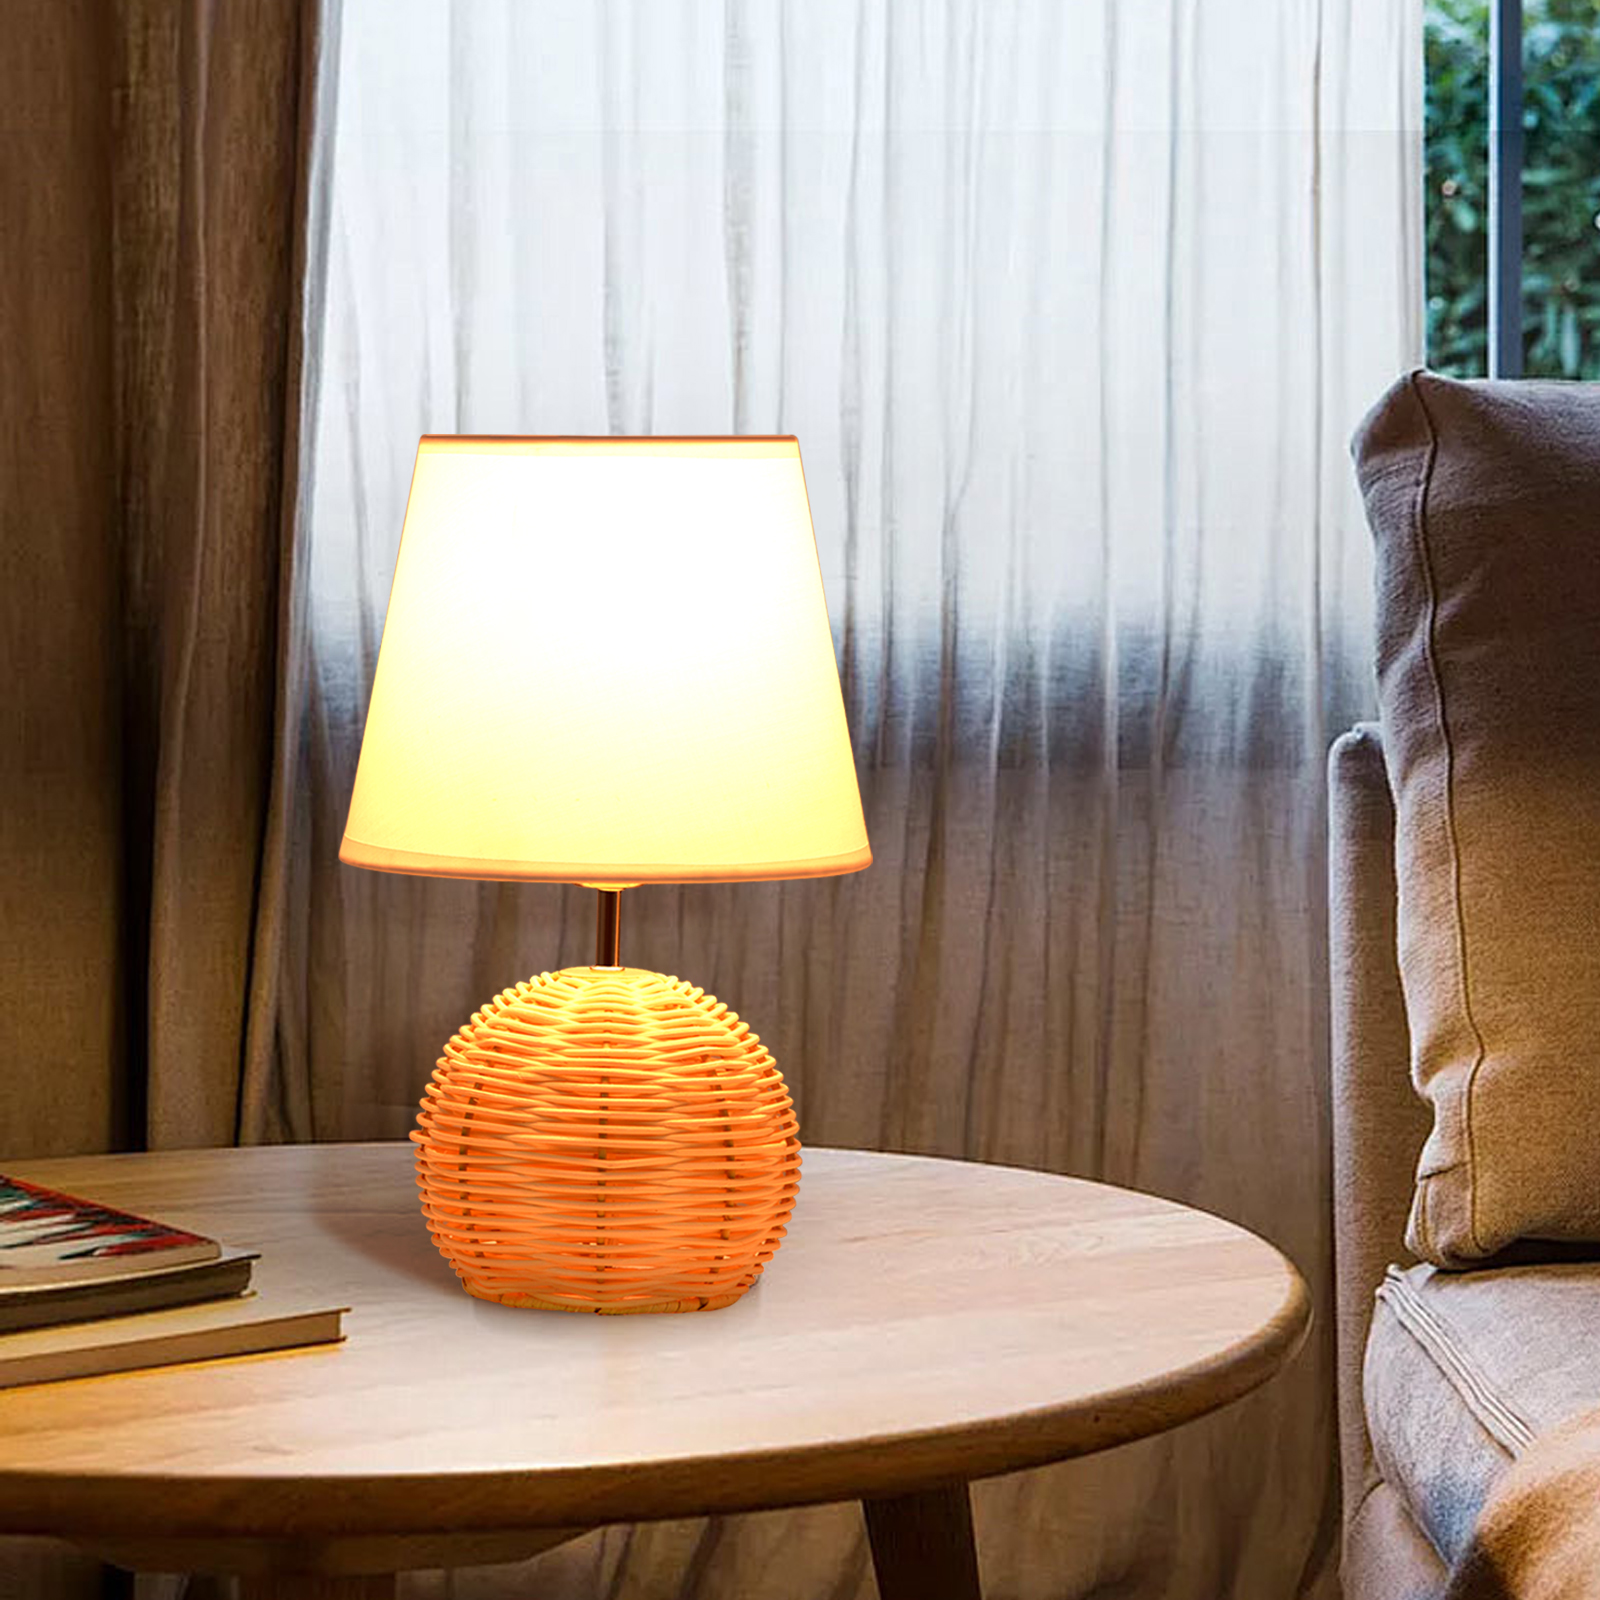 Japanese retro style bedroom rattan table lamp